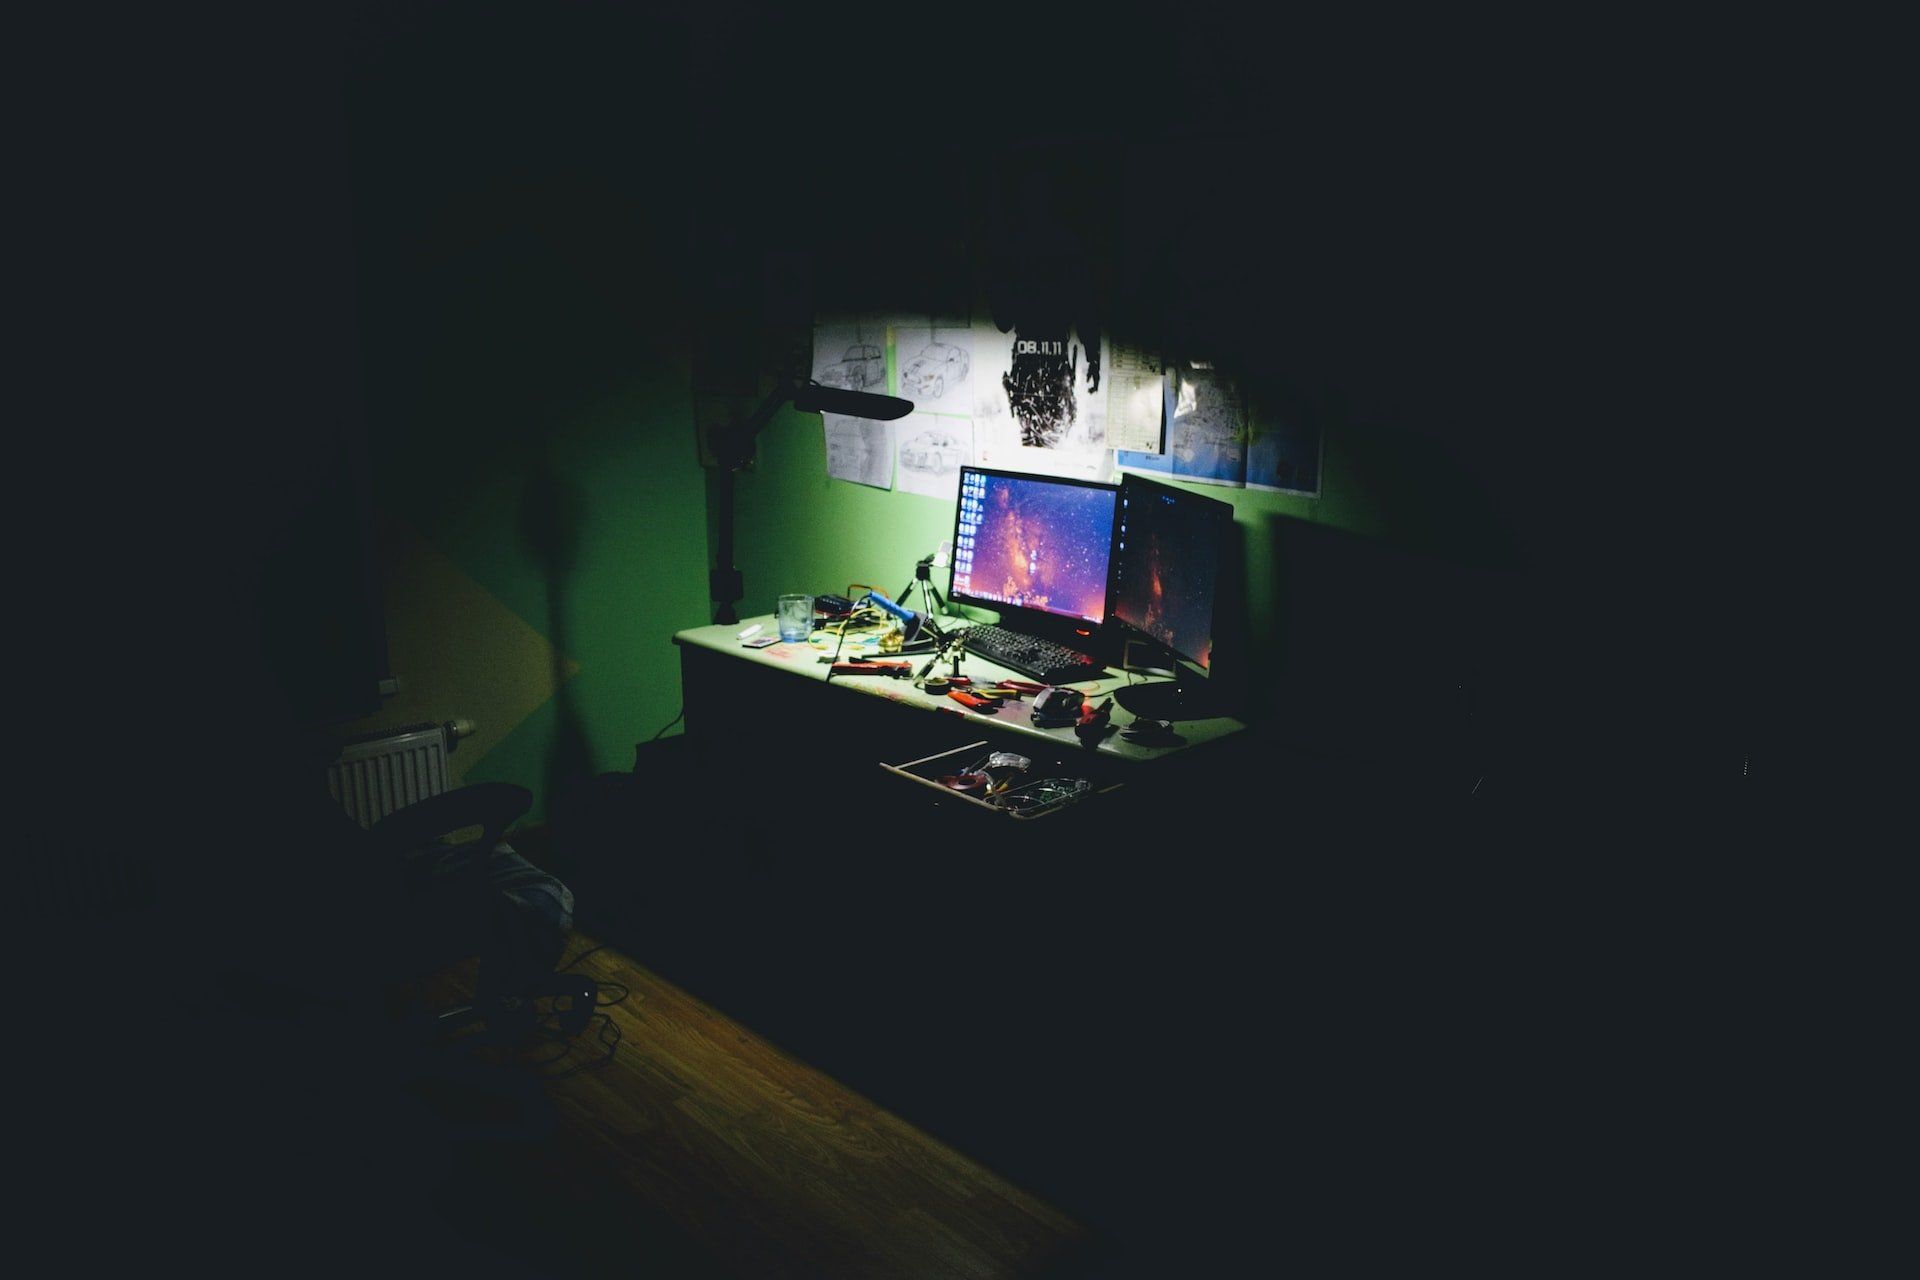 a hacker's computer in the dark